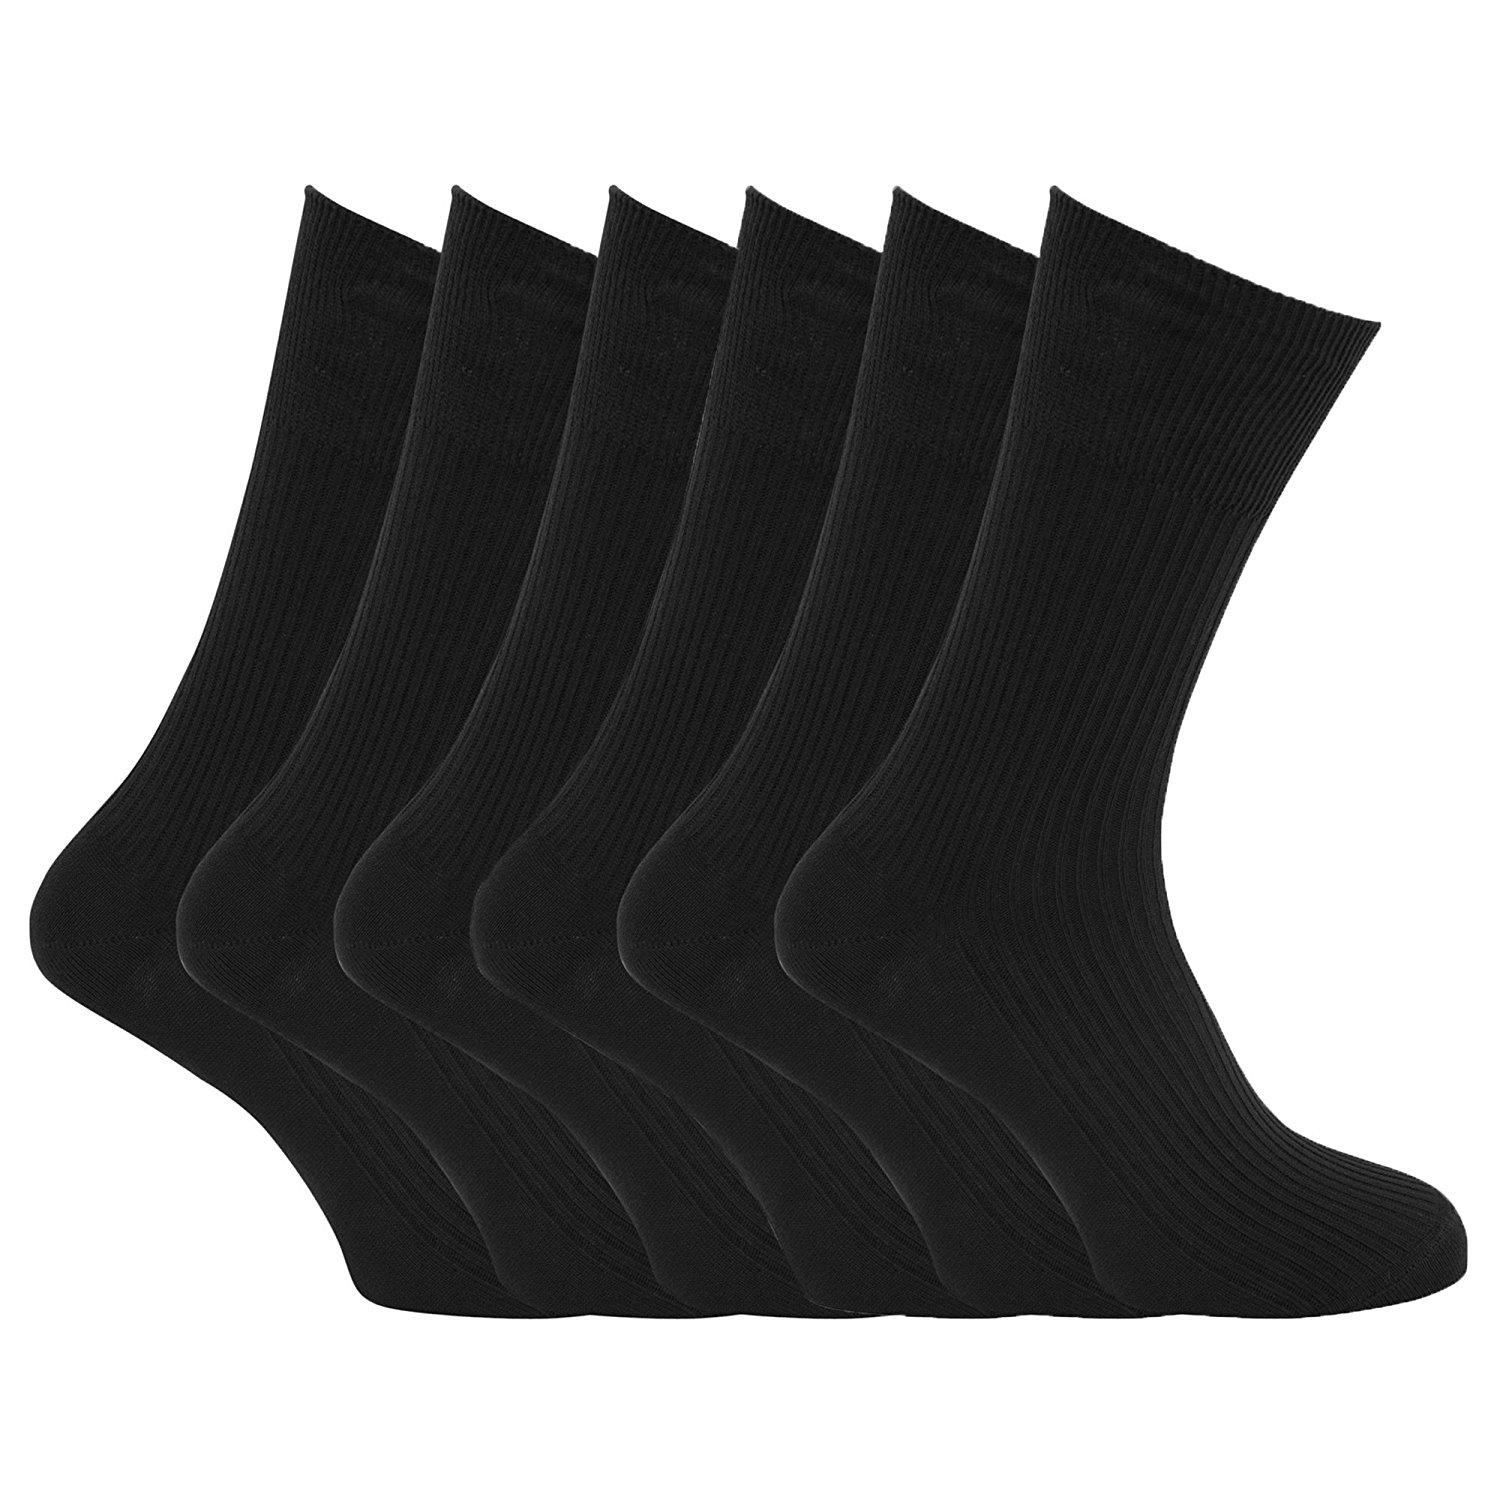 Black Cotton Socks for Man